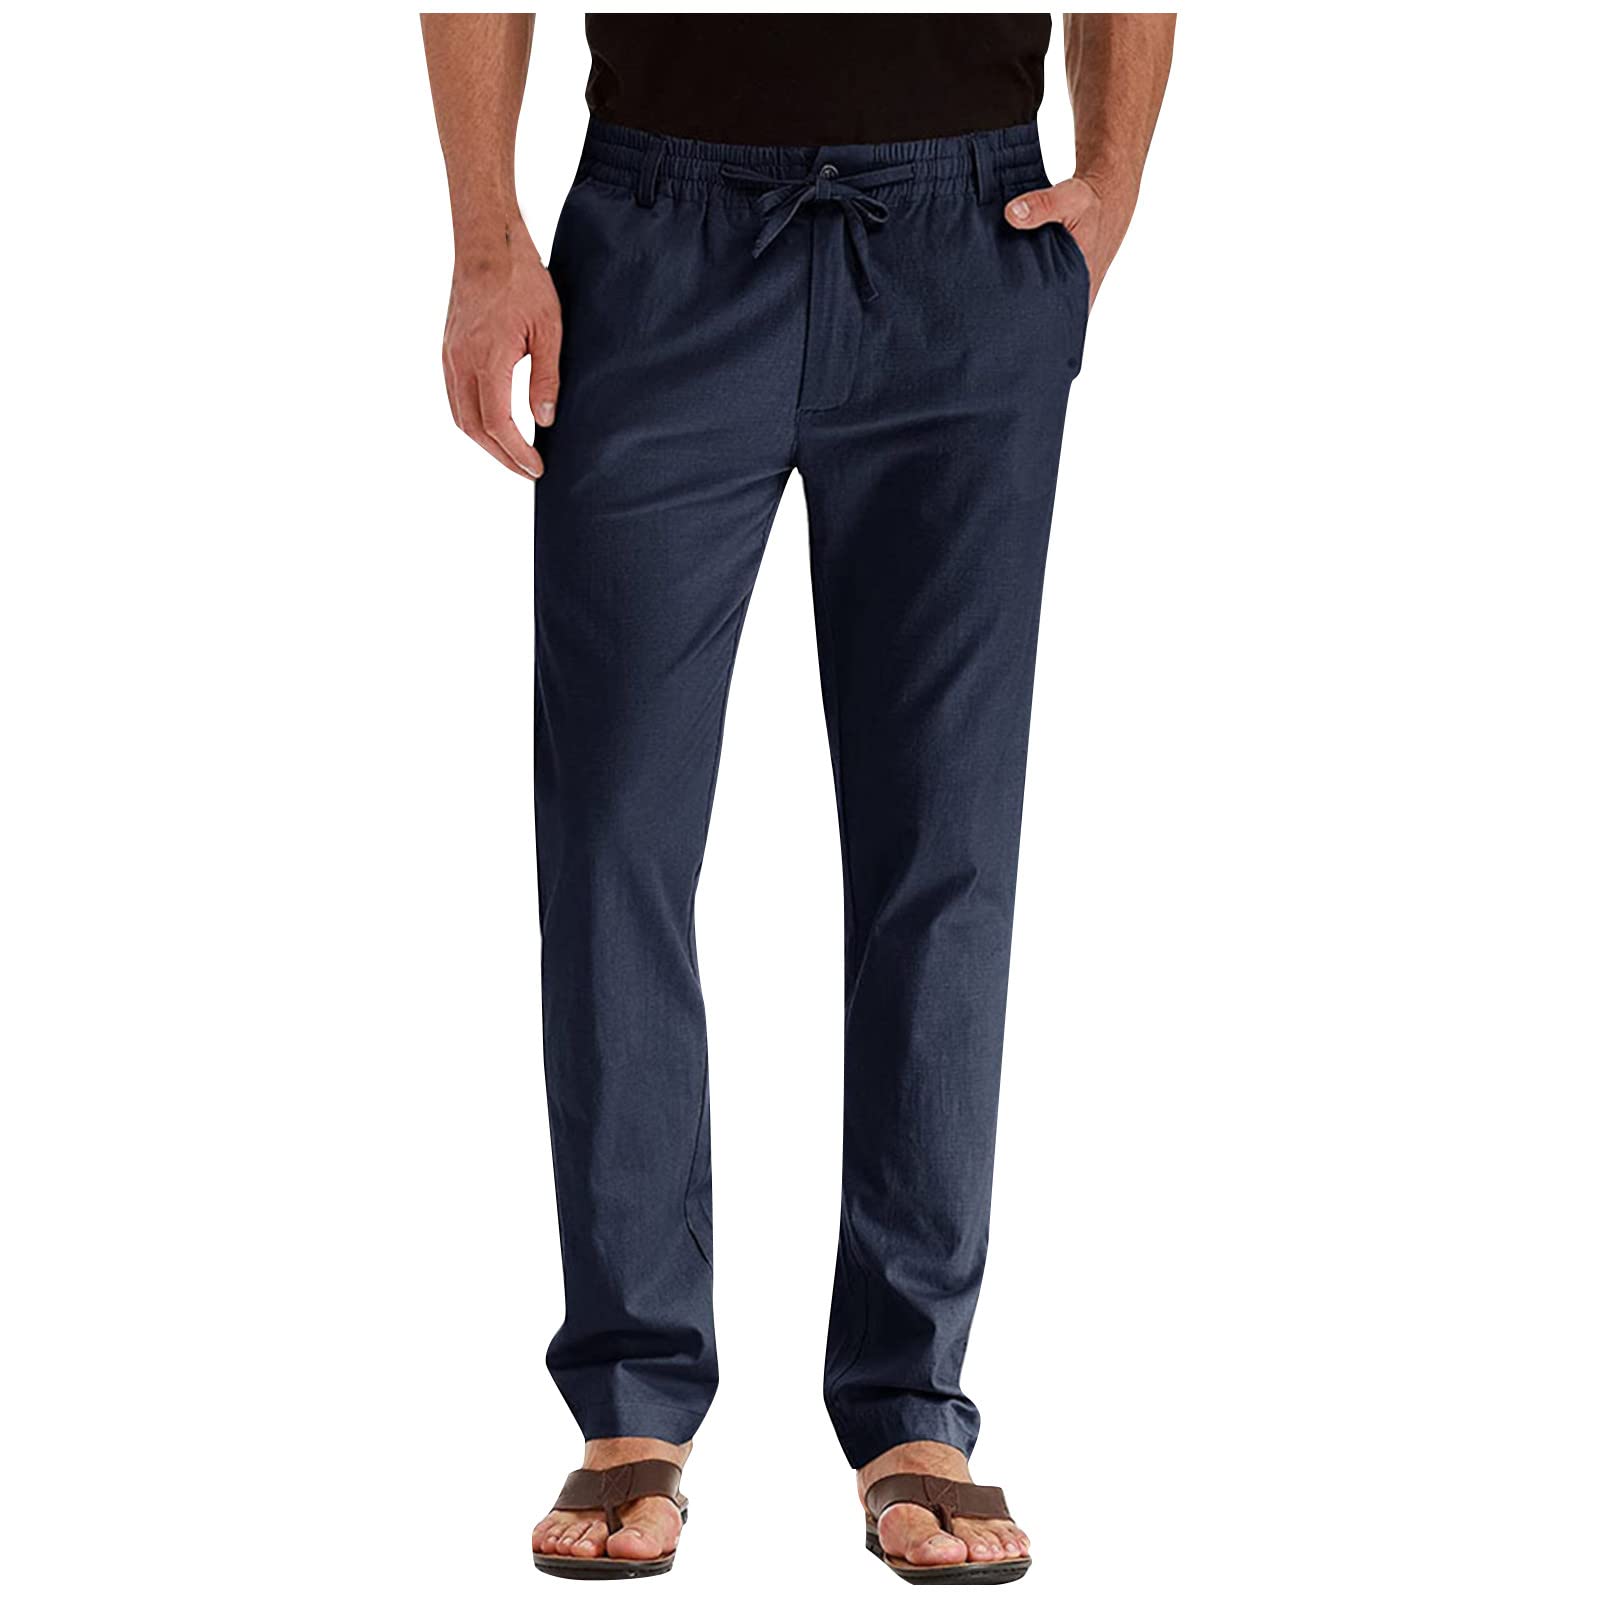 XIAXOGOOL Mens Dress Pants Classic Fit Elastic Waist Drawstring Office Work Pants Summer Lightweight Straight-Leg Pants